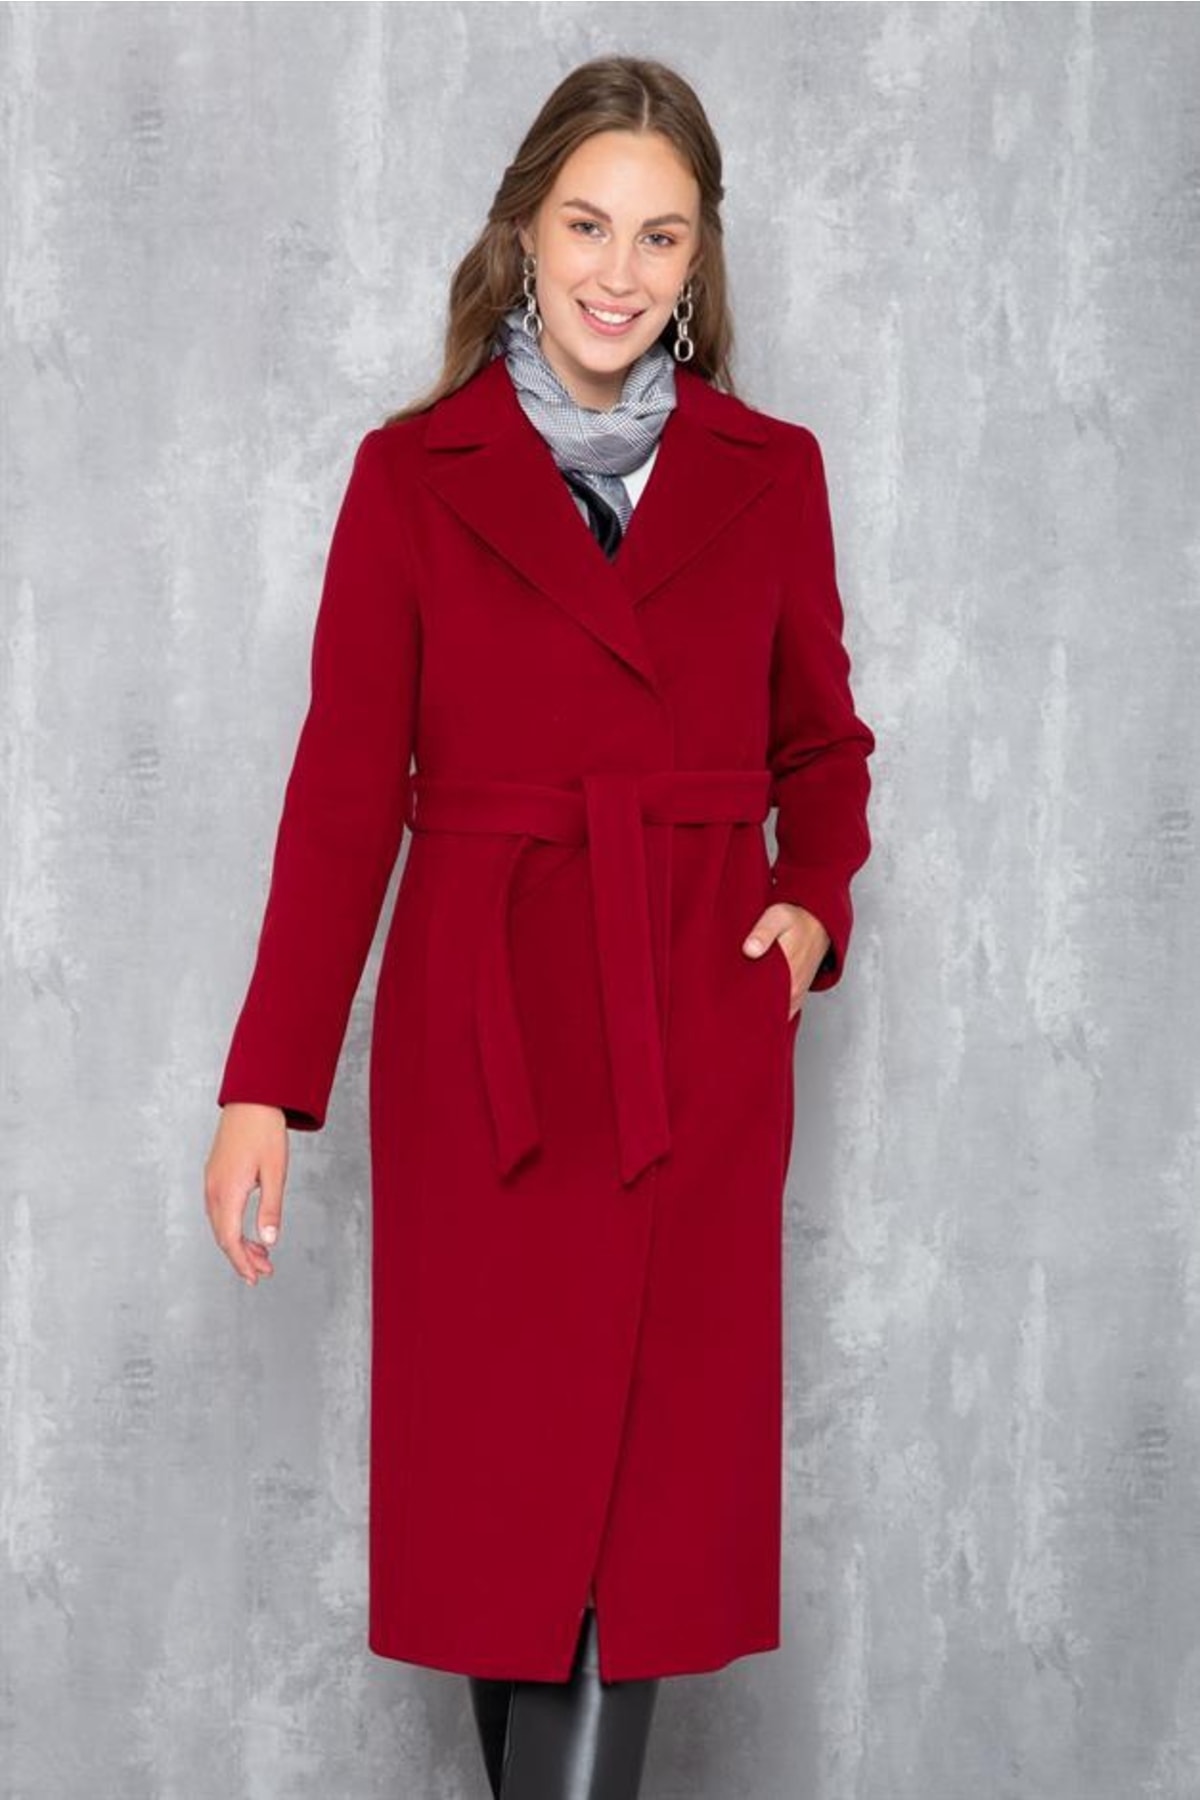 Concept. Mantel Rot Zweireihig Fast ausverkauft